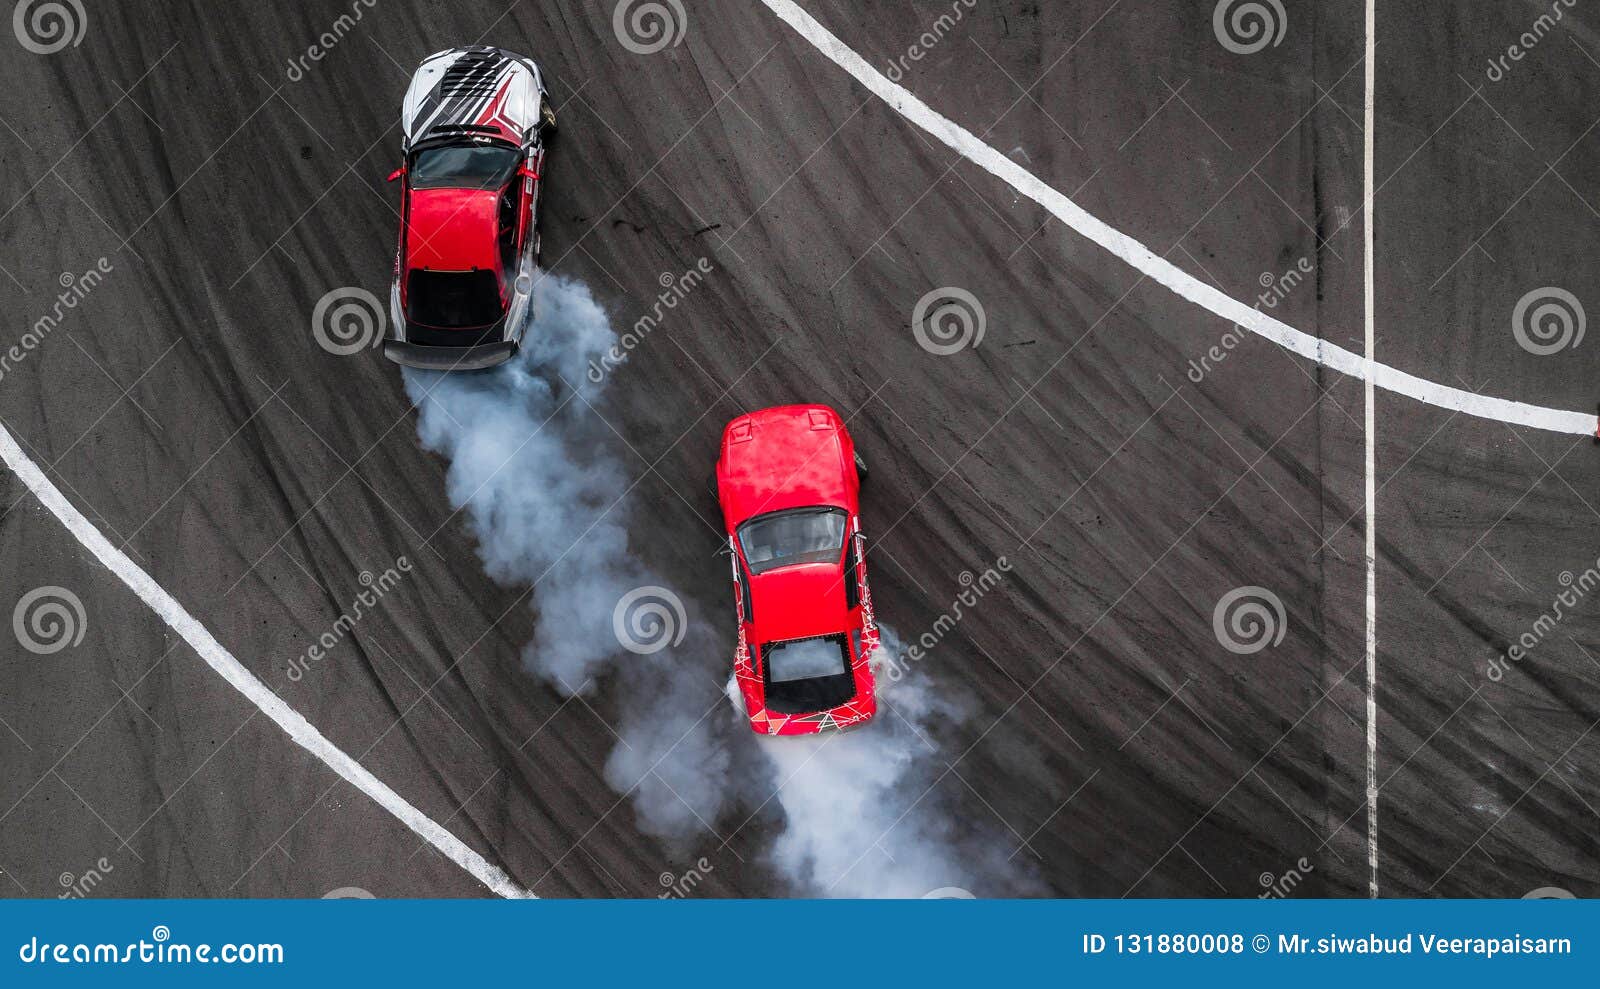 https://thumbs.dreamstime.com/z/aerial-view-drift-battle-two-cars-race-track-wi-smoke-131880008.jpg